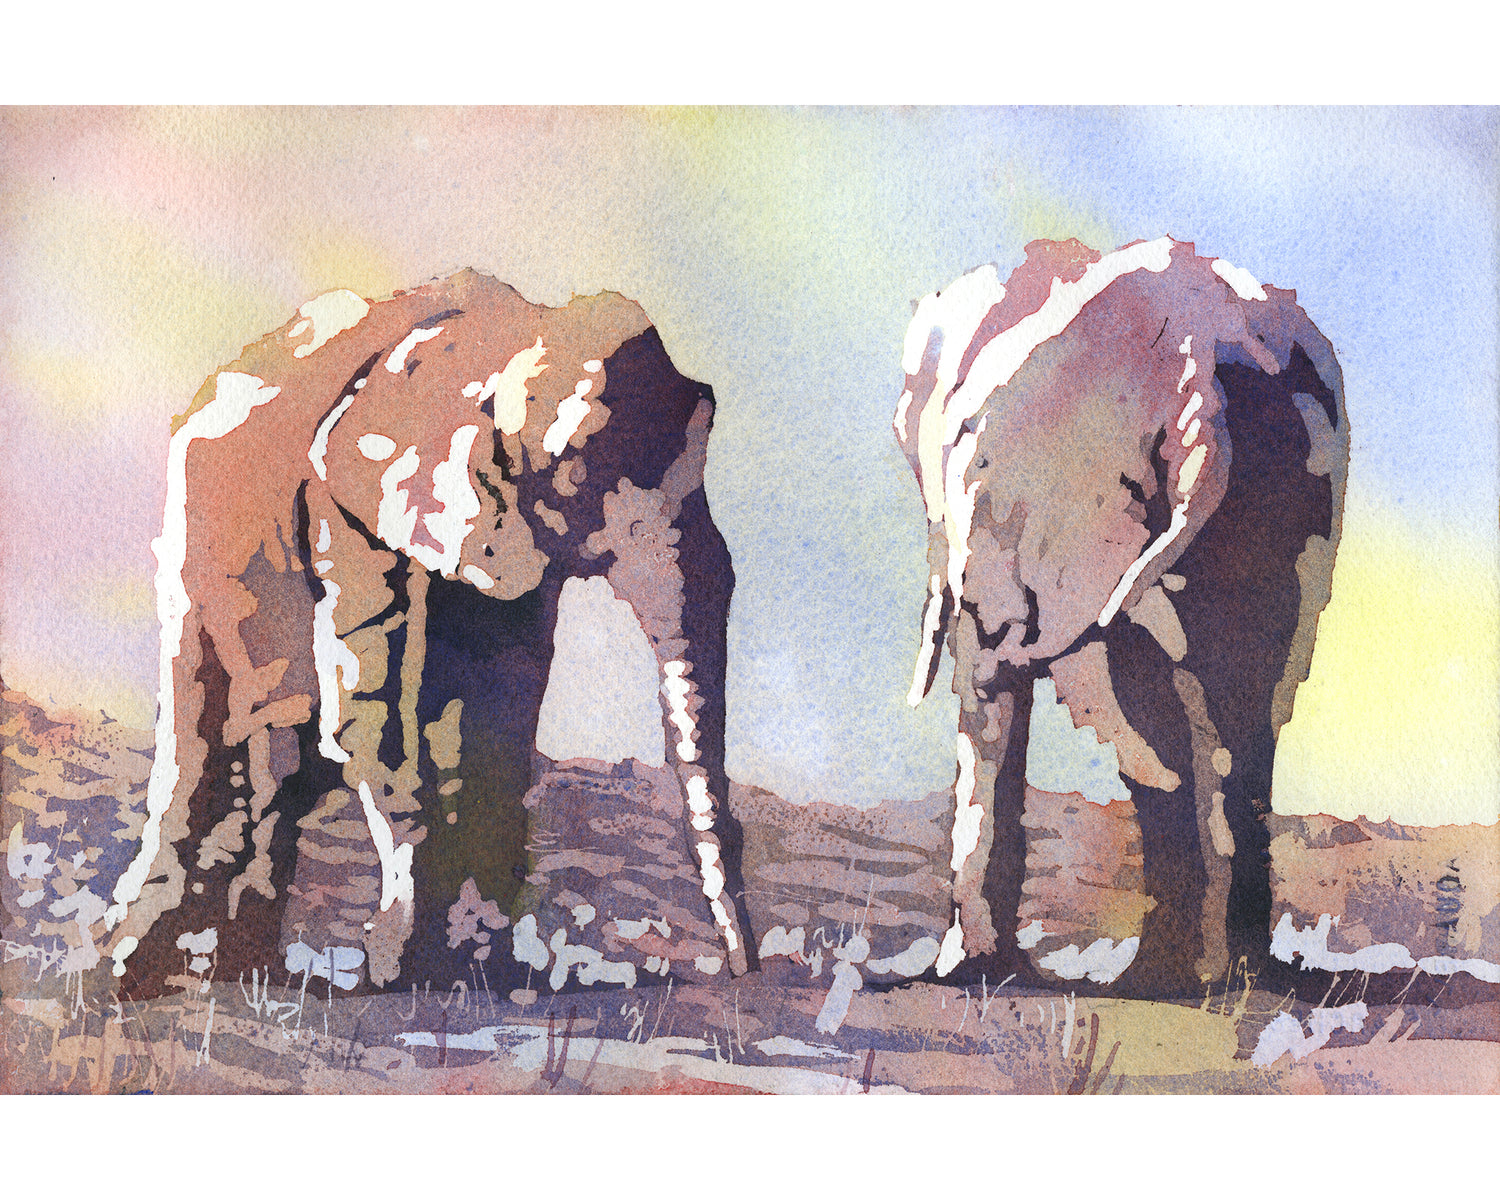 Elephant Paintings